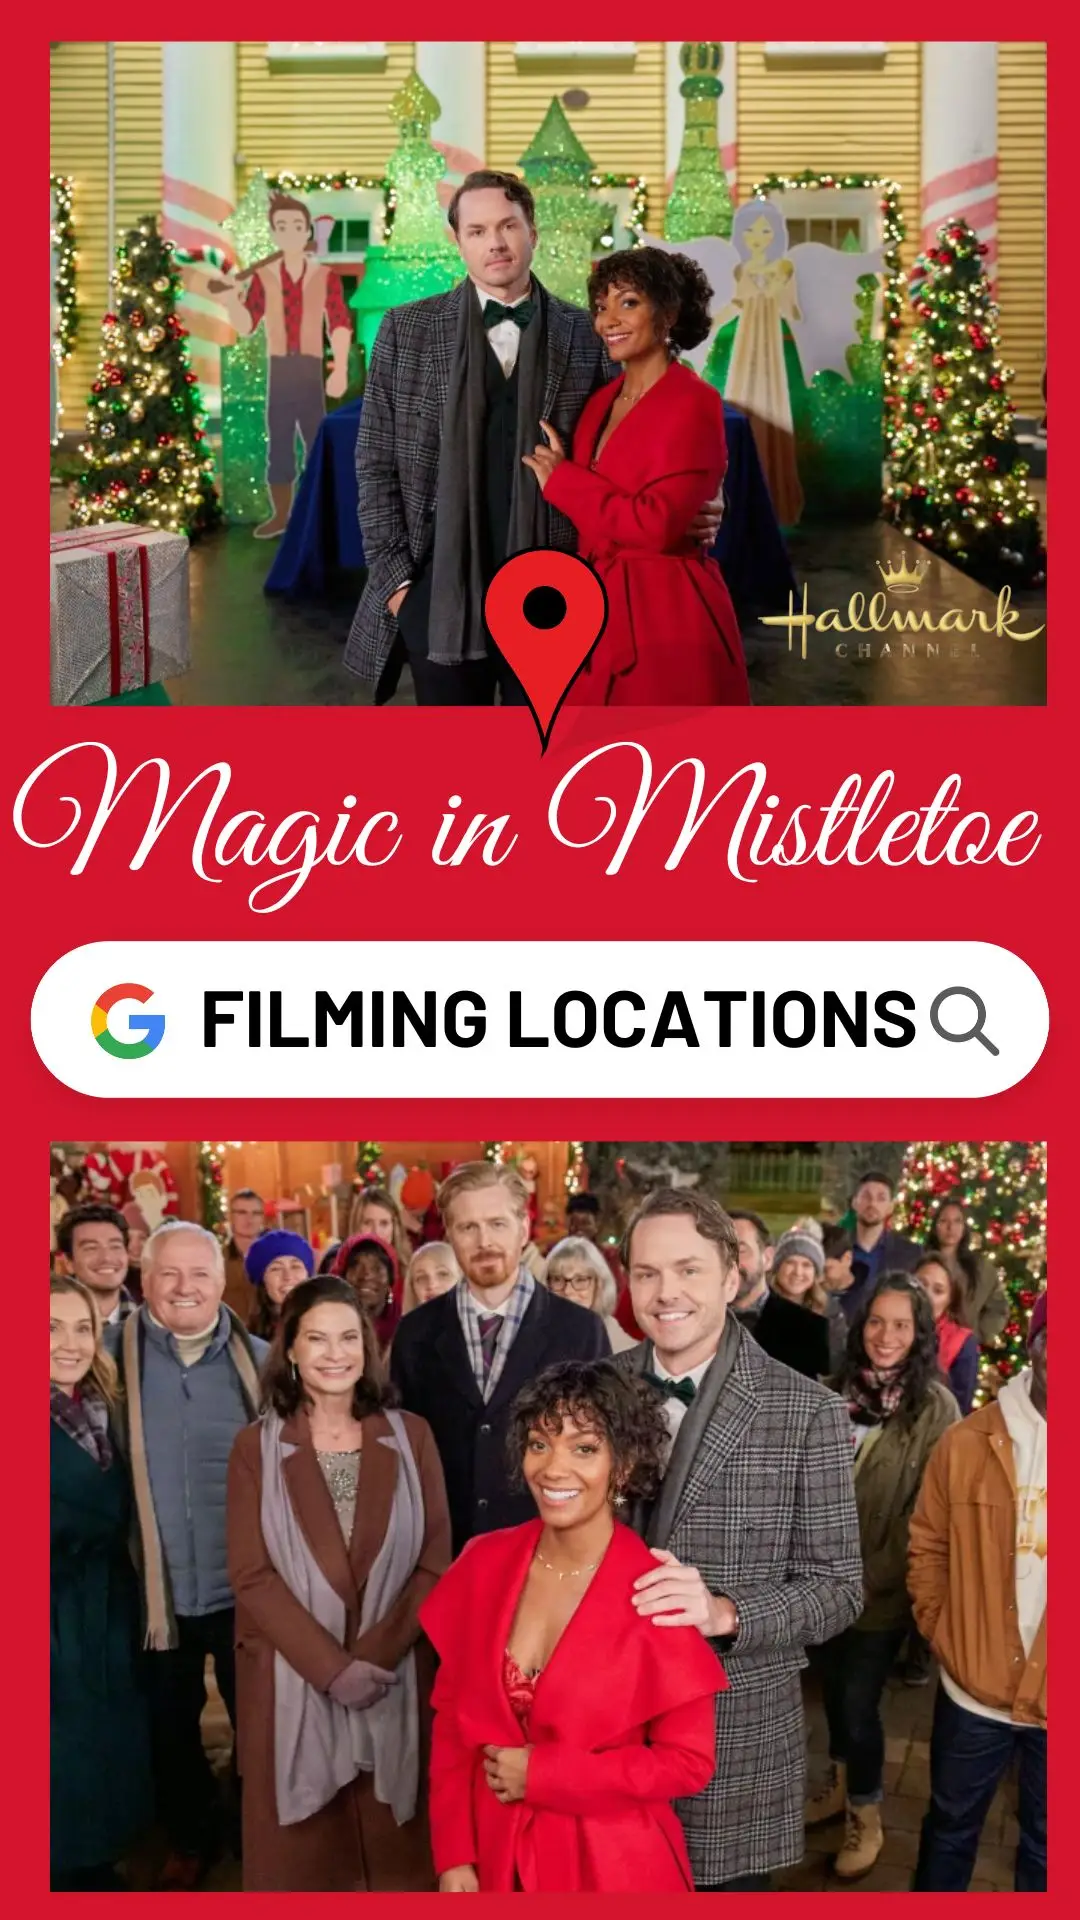 Magic in Mistletoe Filming Locations